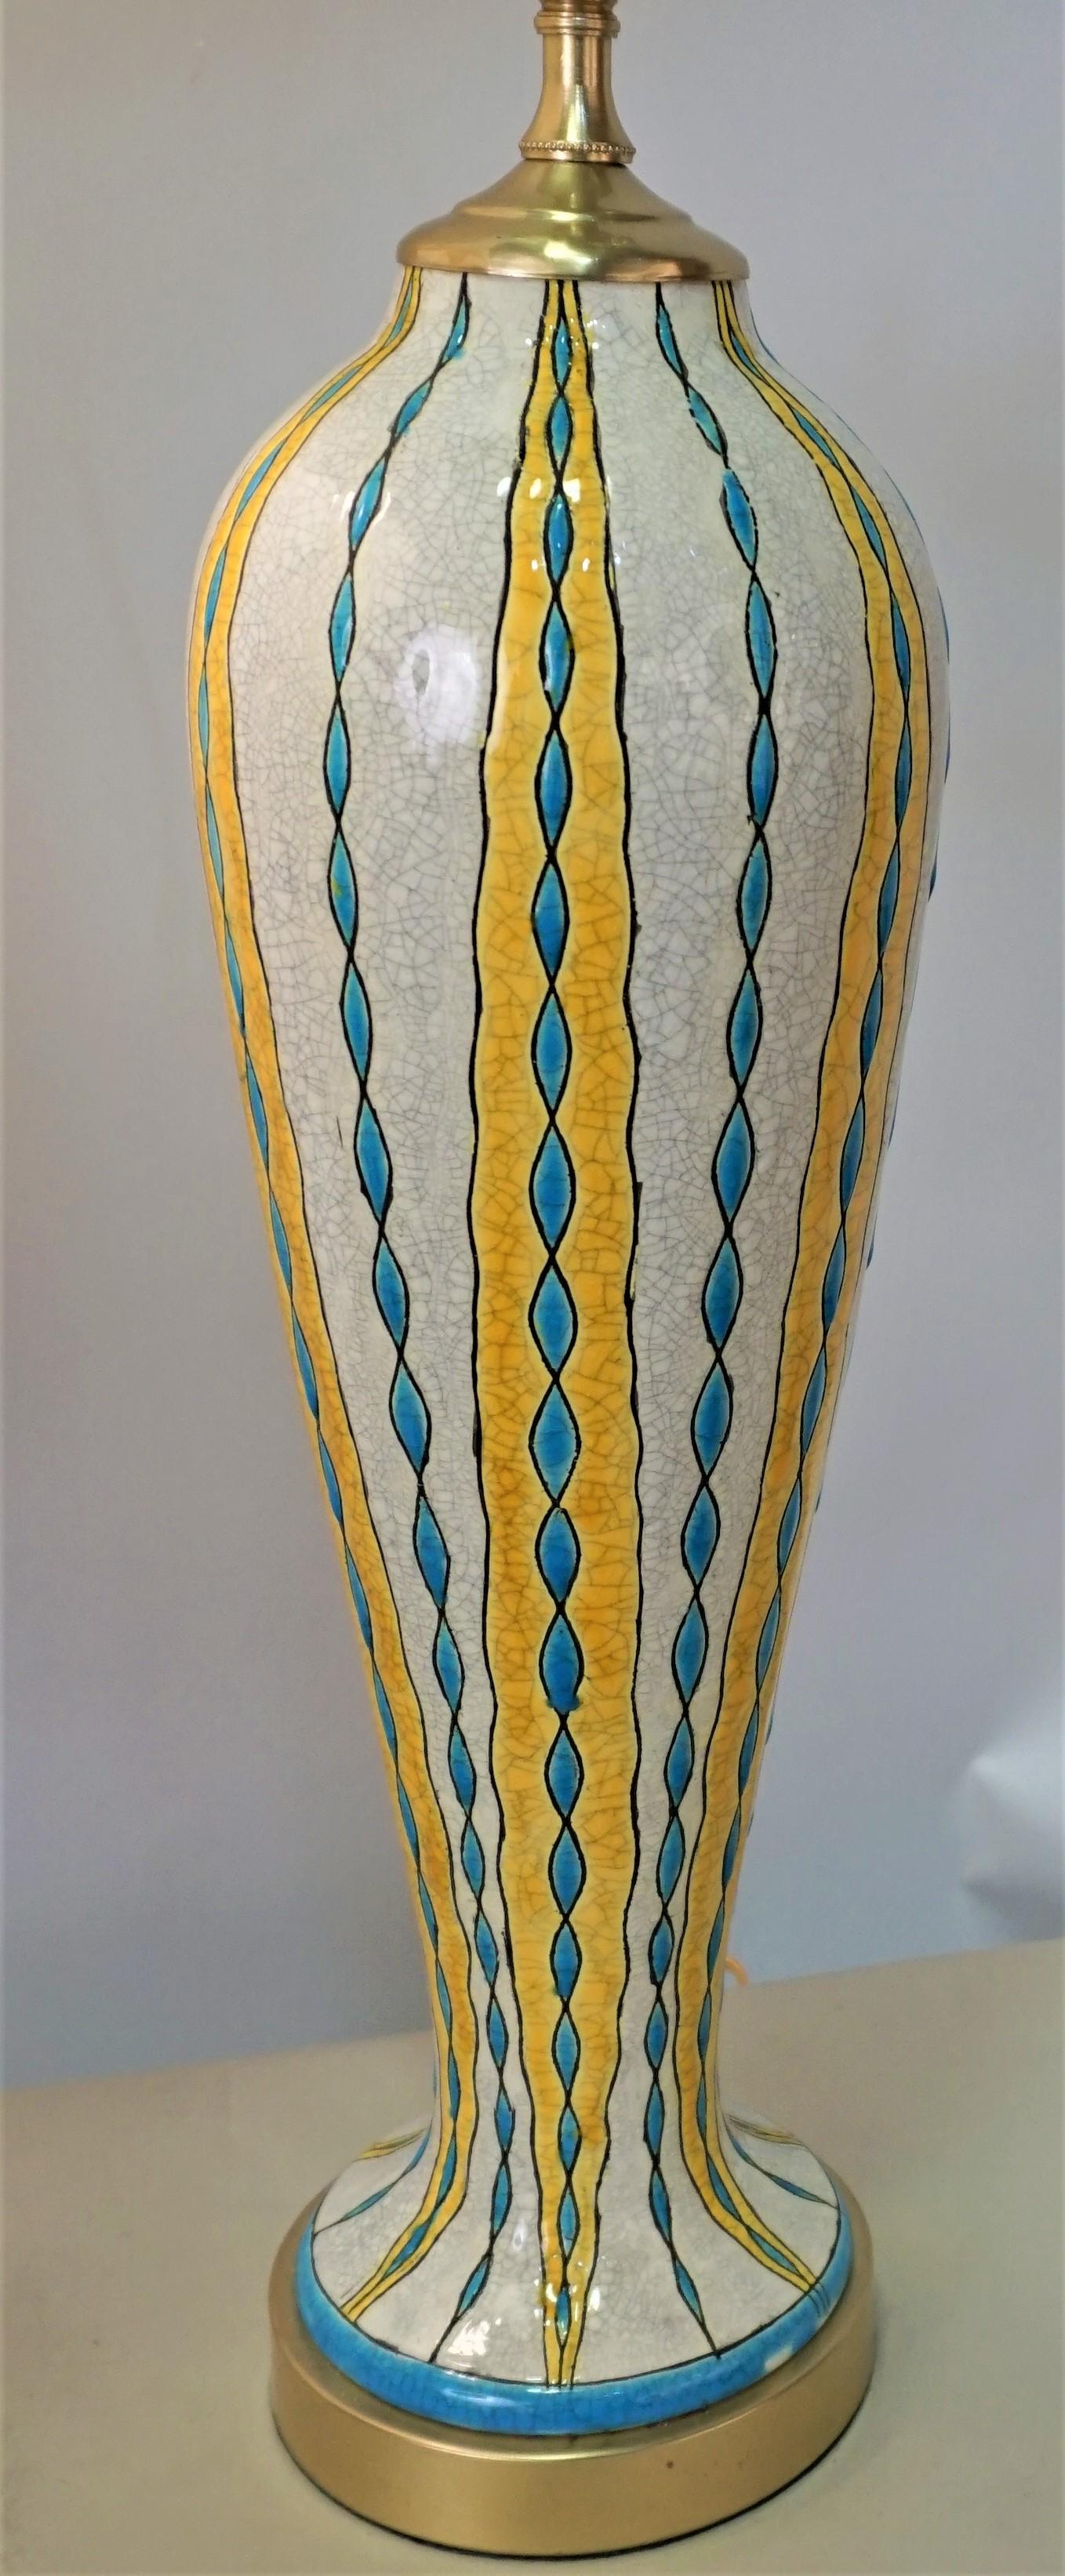 Belgian Pair of Electrified Lamps Keramis Art Deco vase by Charles Catteau for Boch